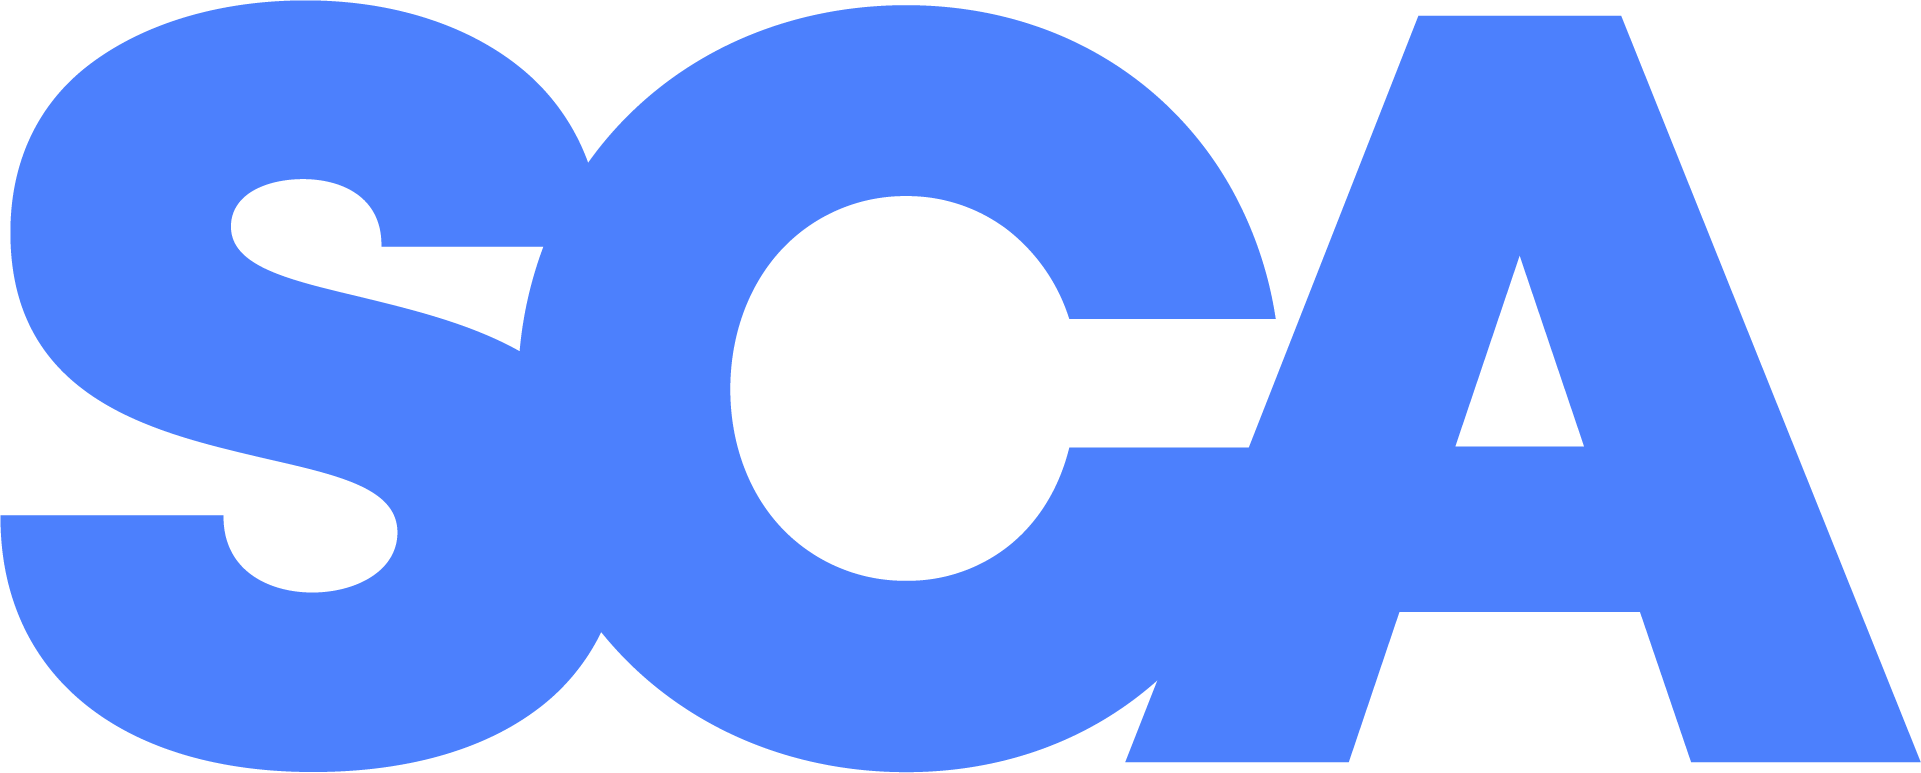 austereo-SCA-logo-01